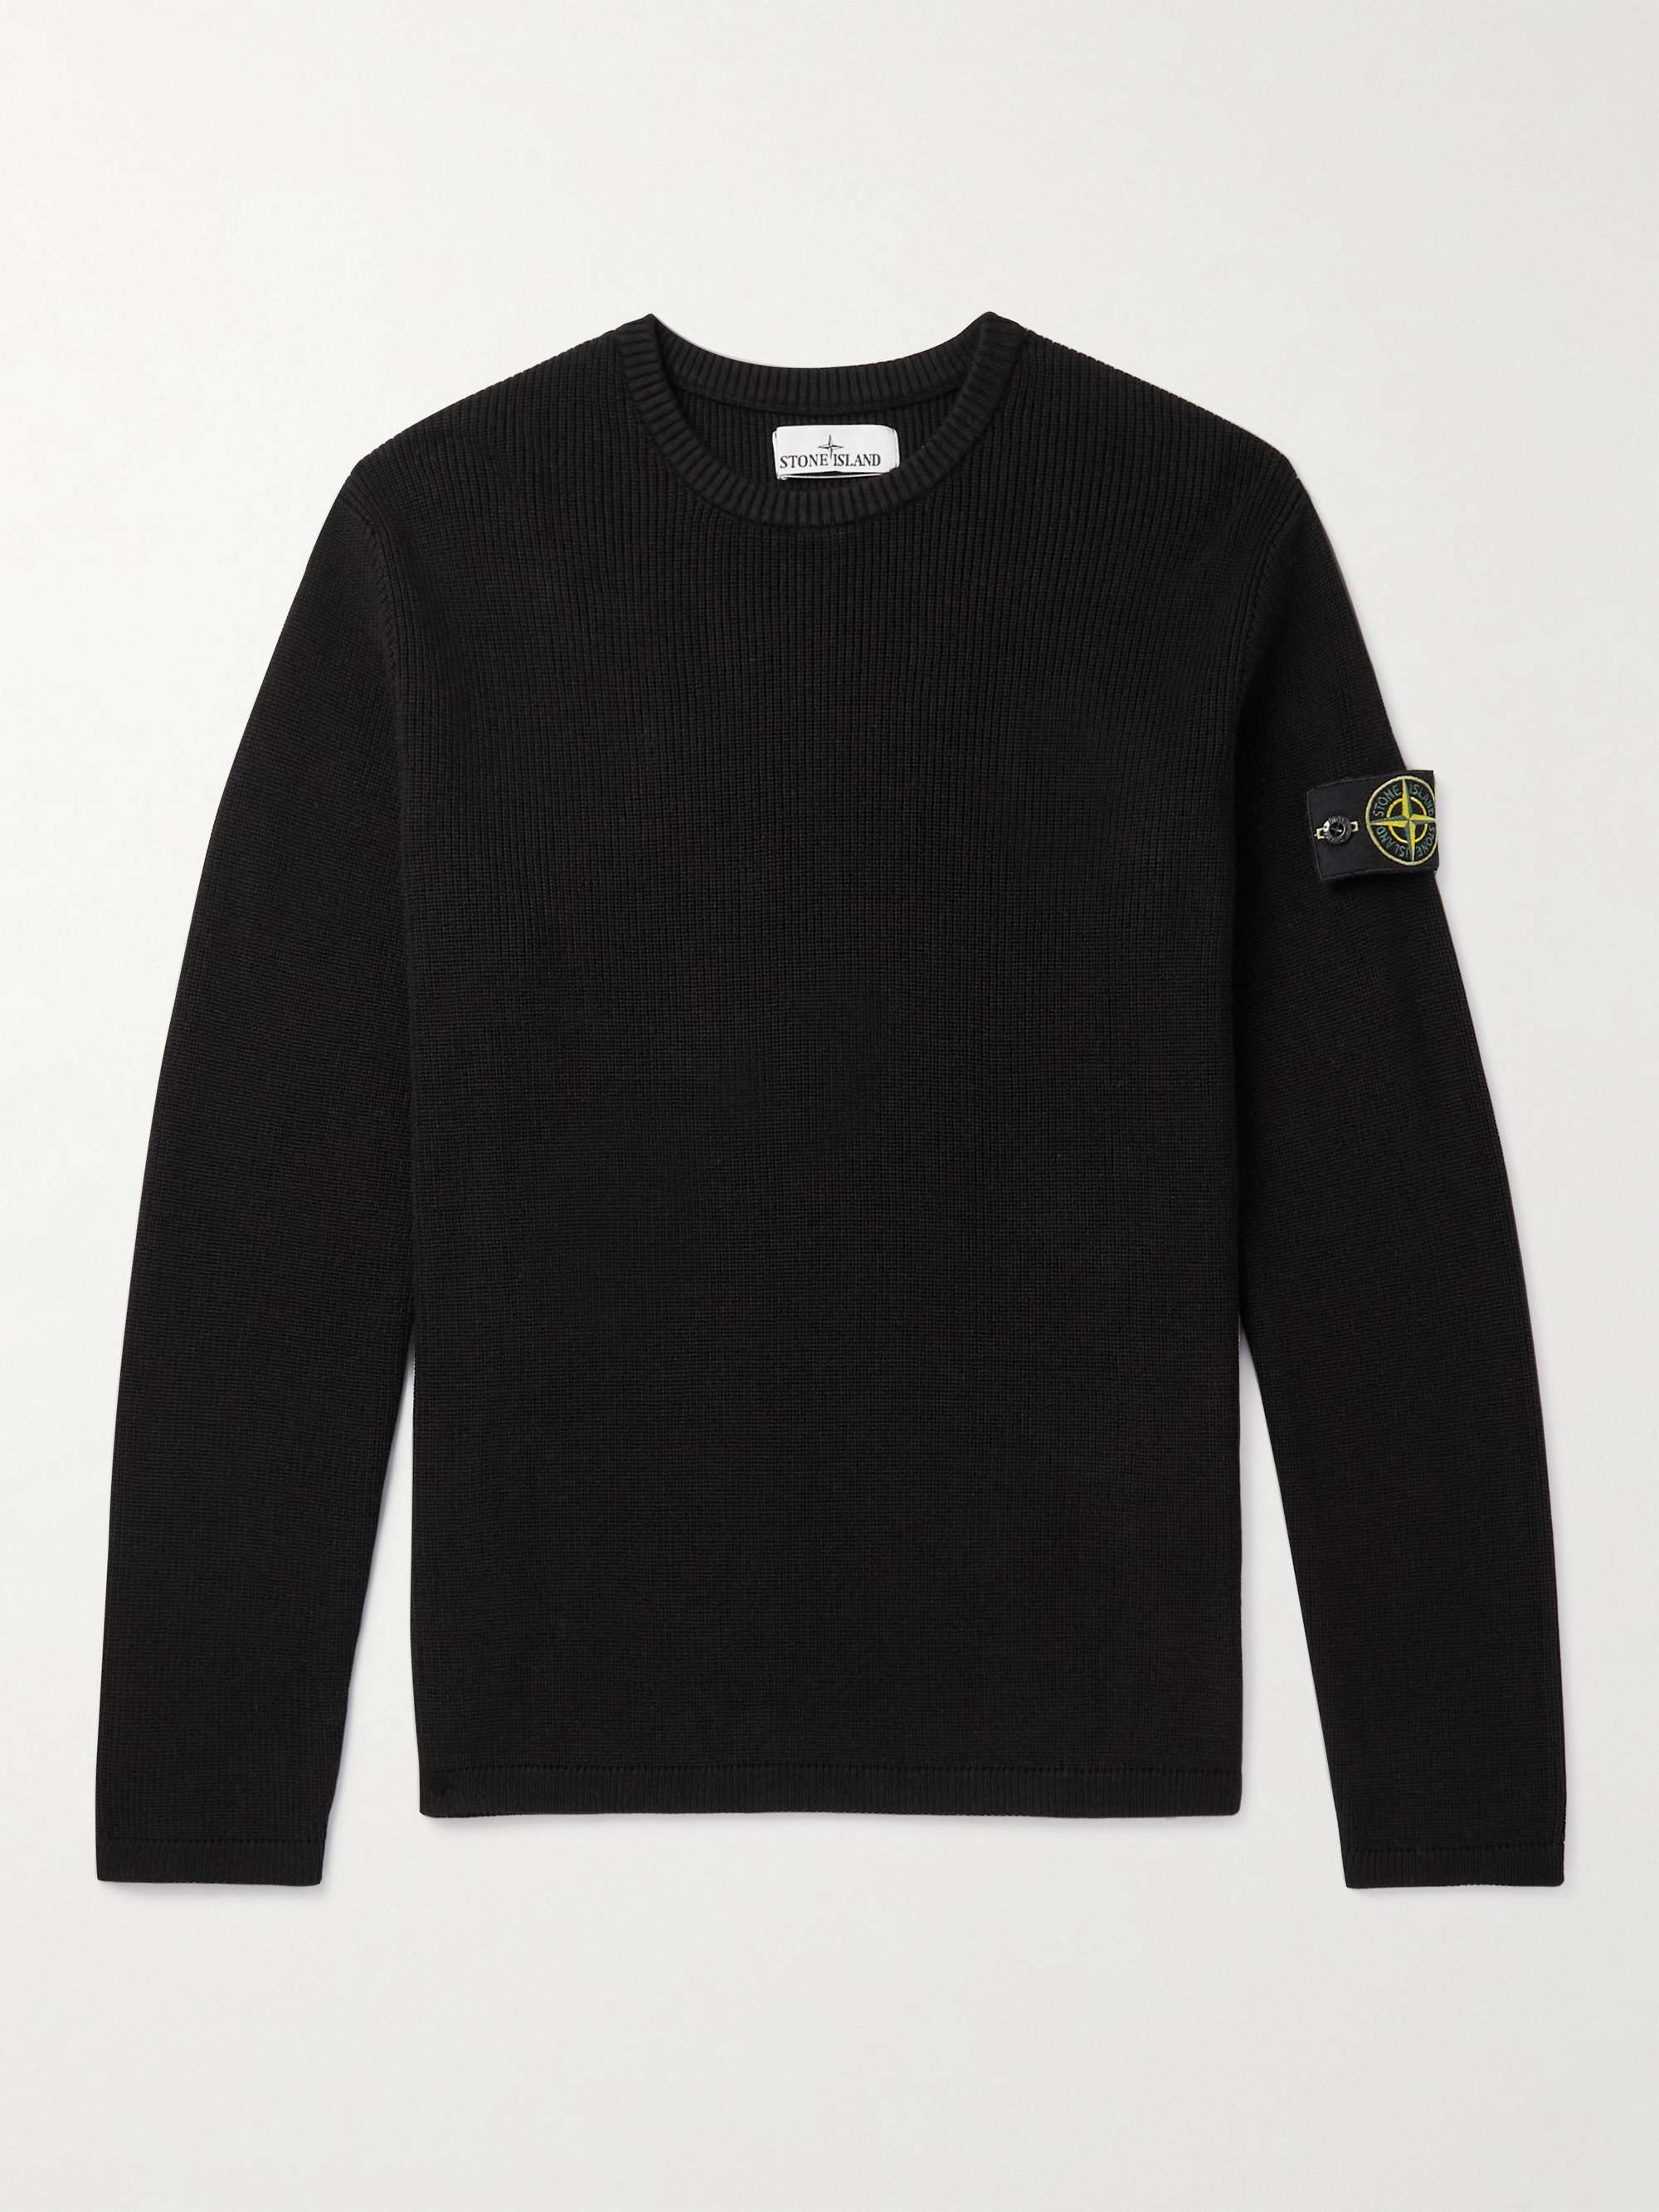 STONE ISLAND Logo-Appliqued Cotton Sweater,Black